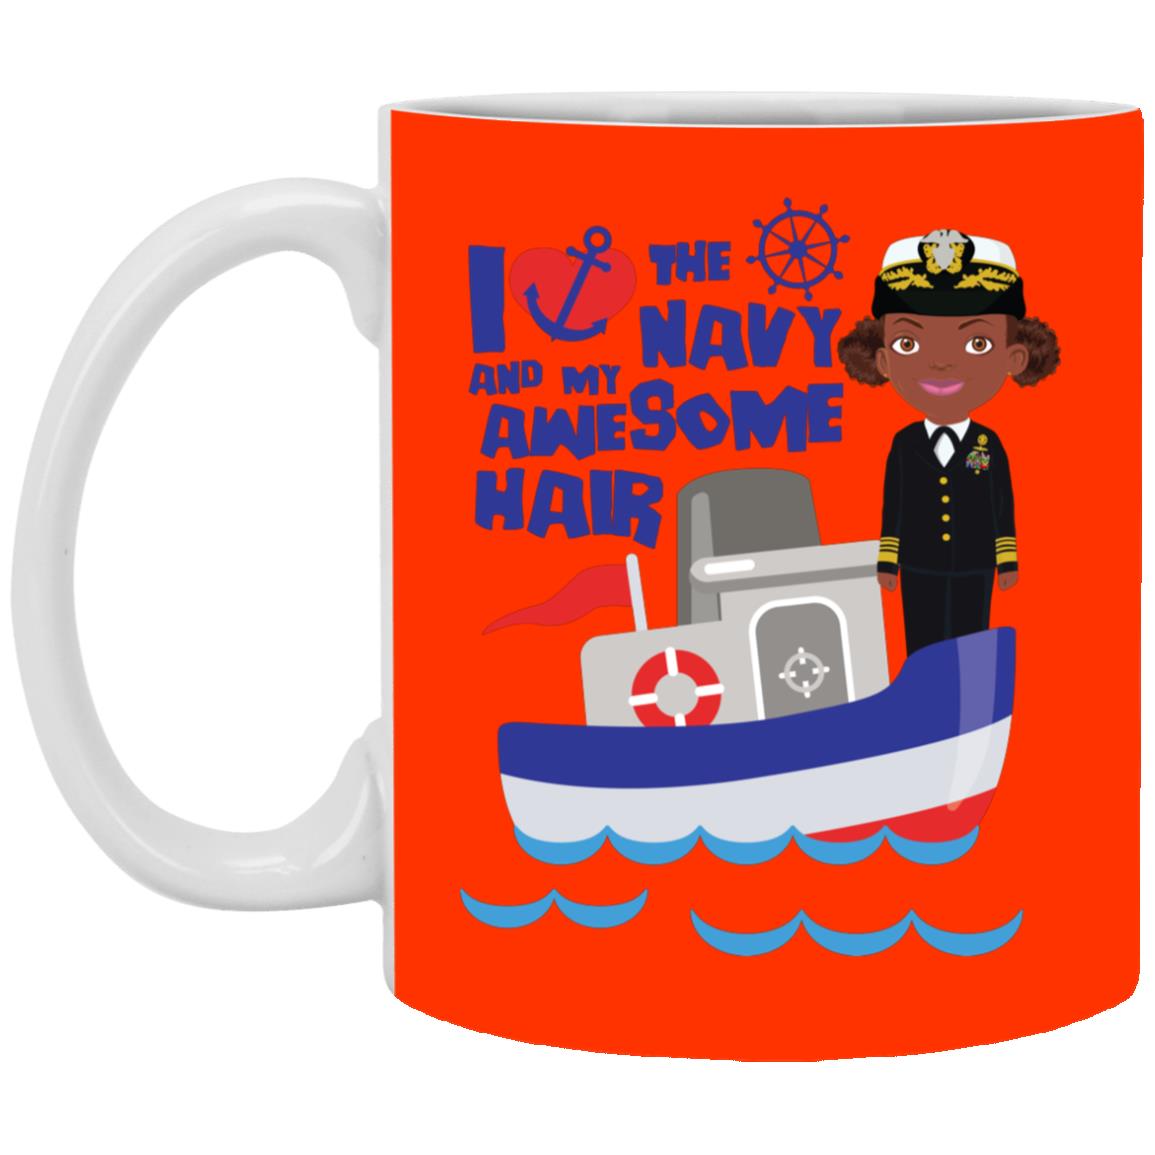 Navy Mug